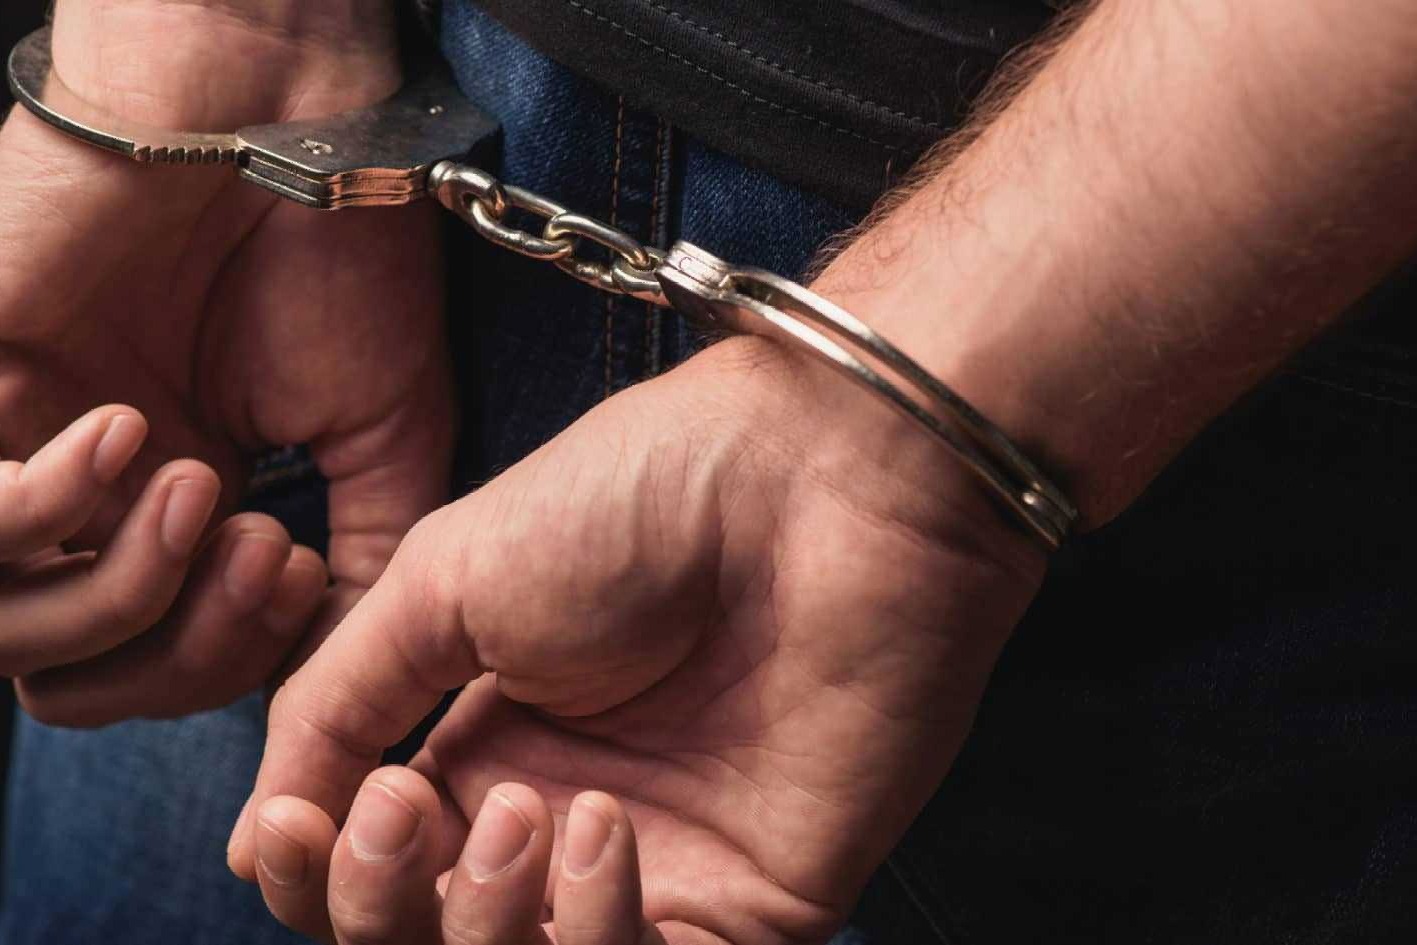 Engineer arrested for making illicit liquor